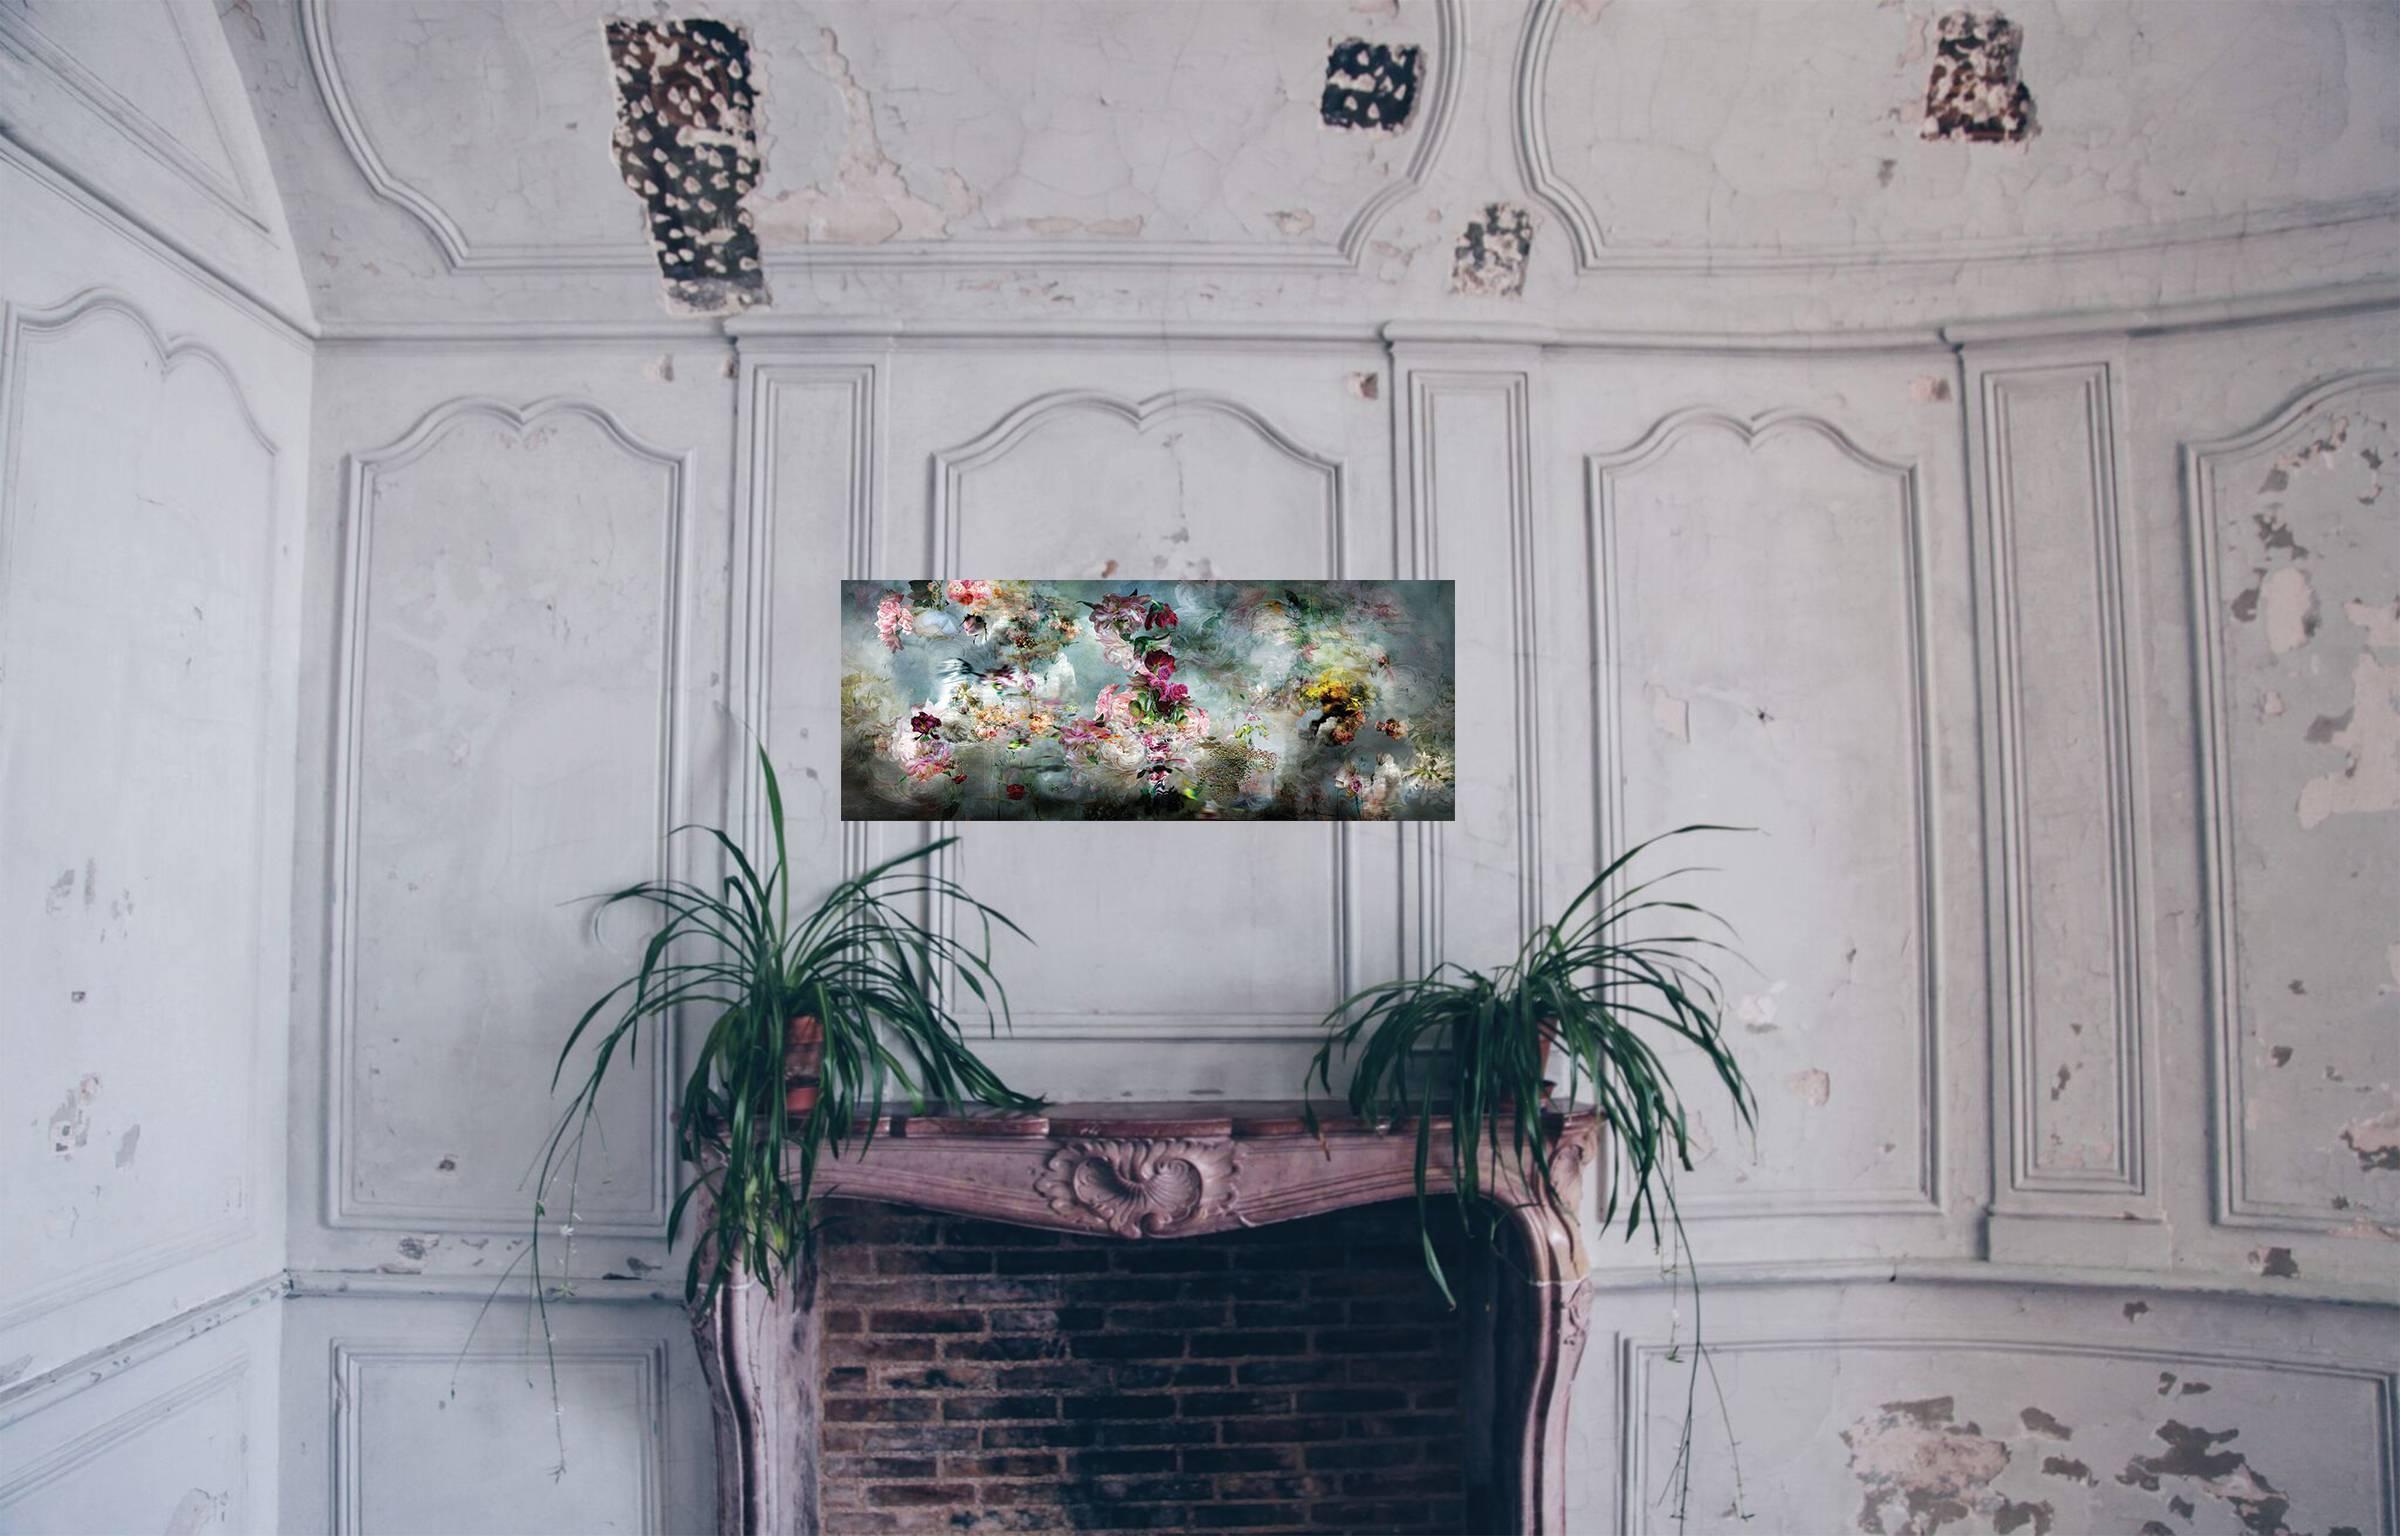 Song for dead heroes #4 florales abstraktes Landschaftsstillleben Blumenfoto – Photograph von Isabelle Menin